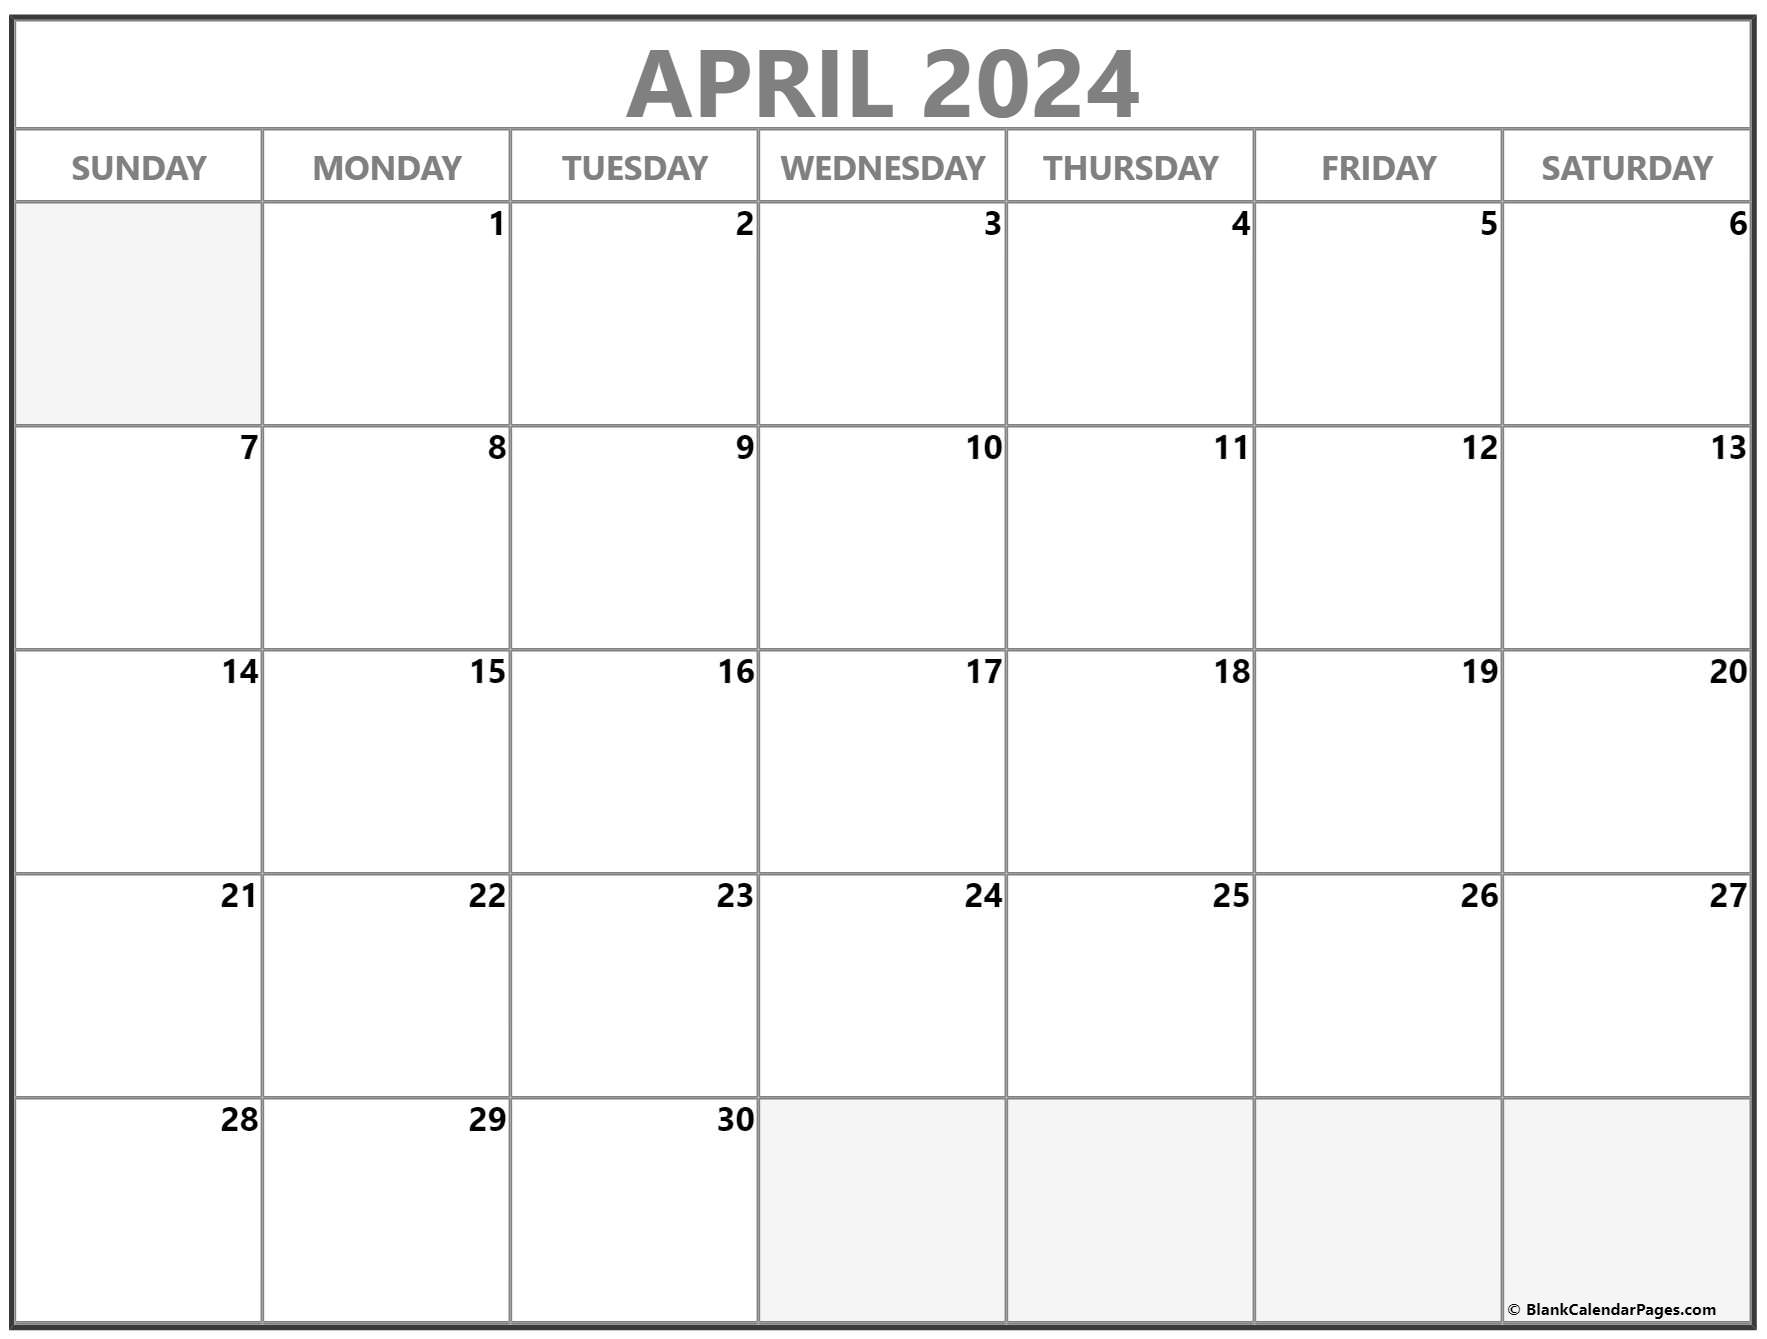 April 2024 Calendar Free Printable Calendar | Free Printable April 2024 Calendar Page